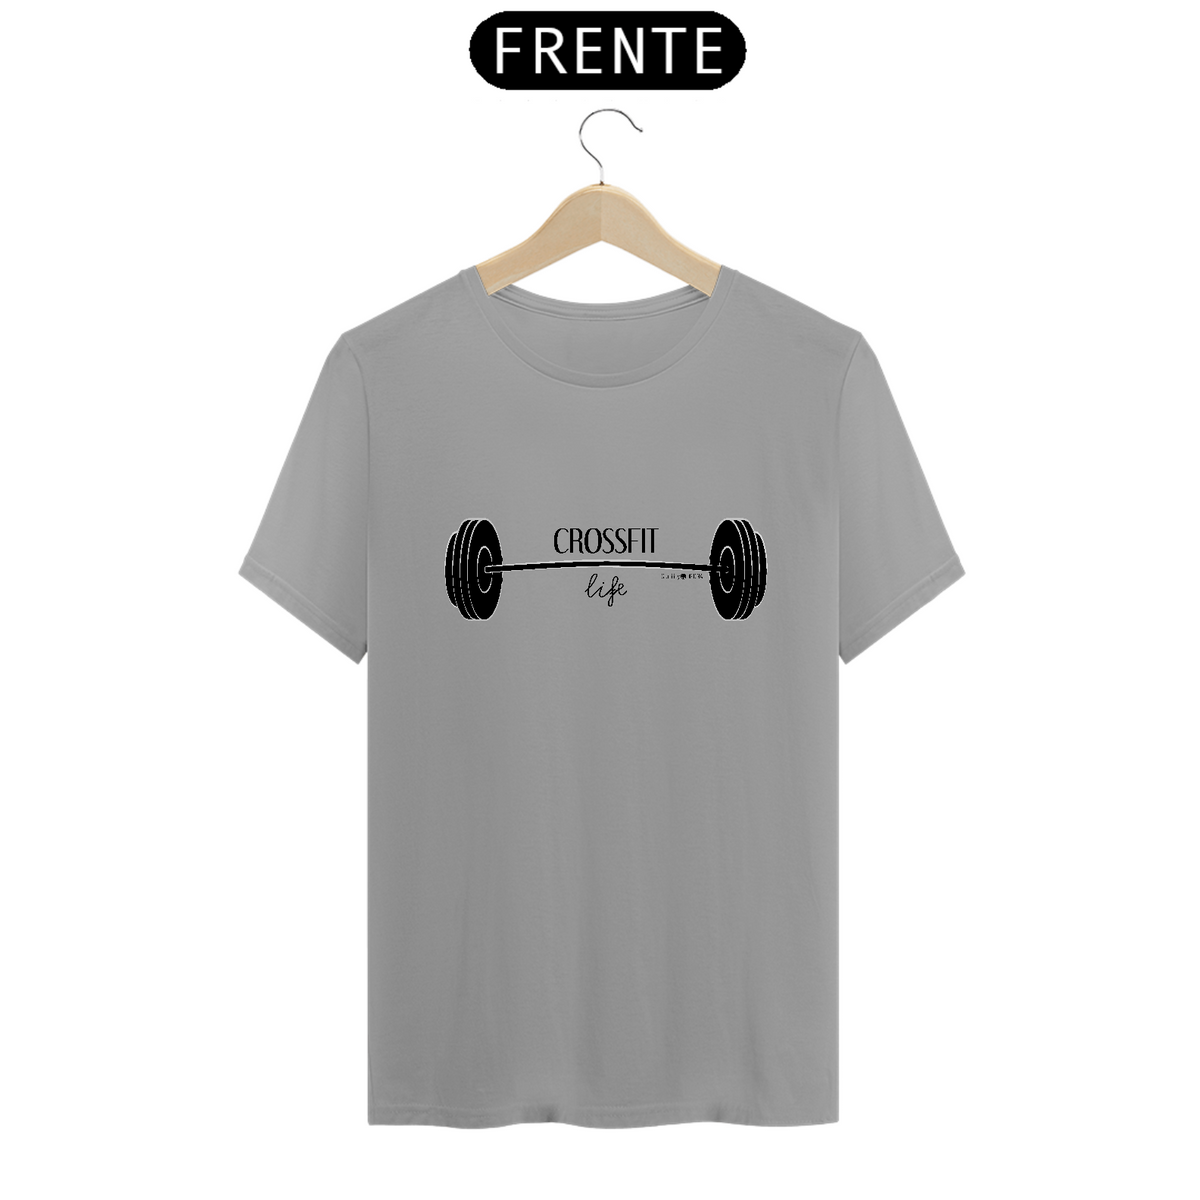 Nome do produto: Camiseta Crossfit T-shirt Prime